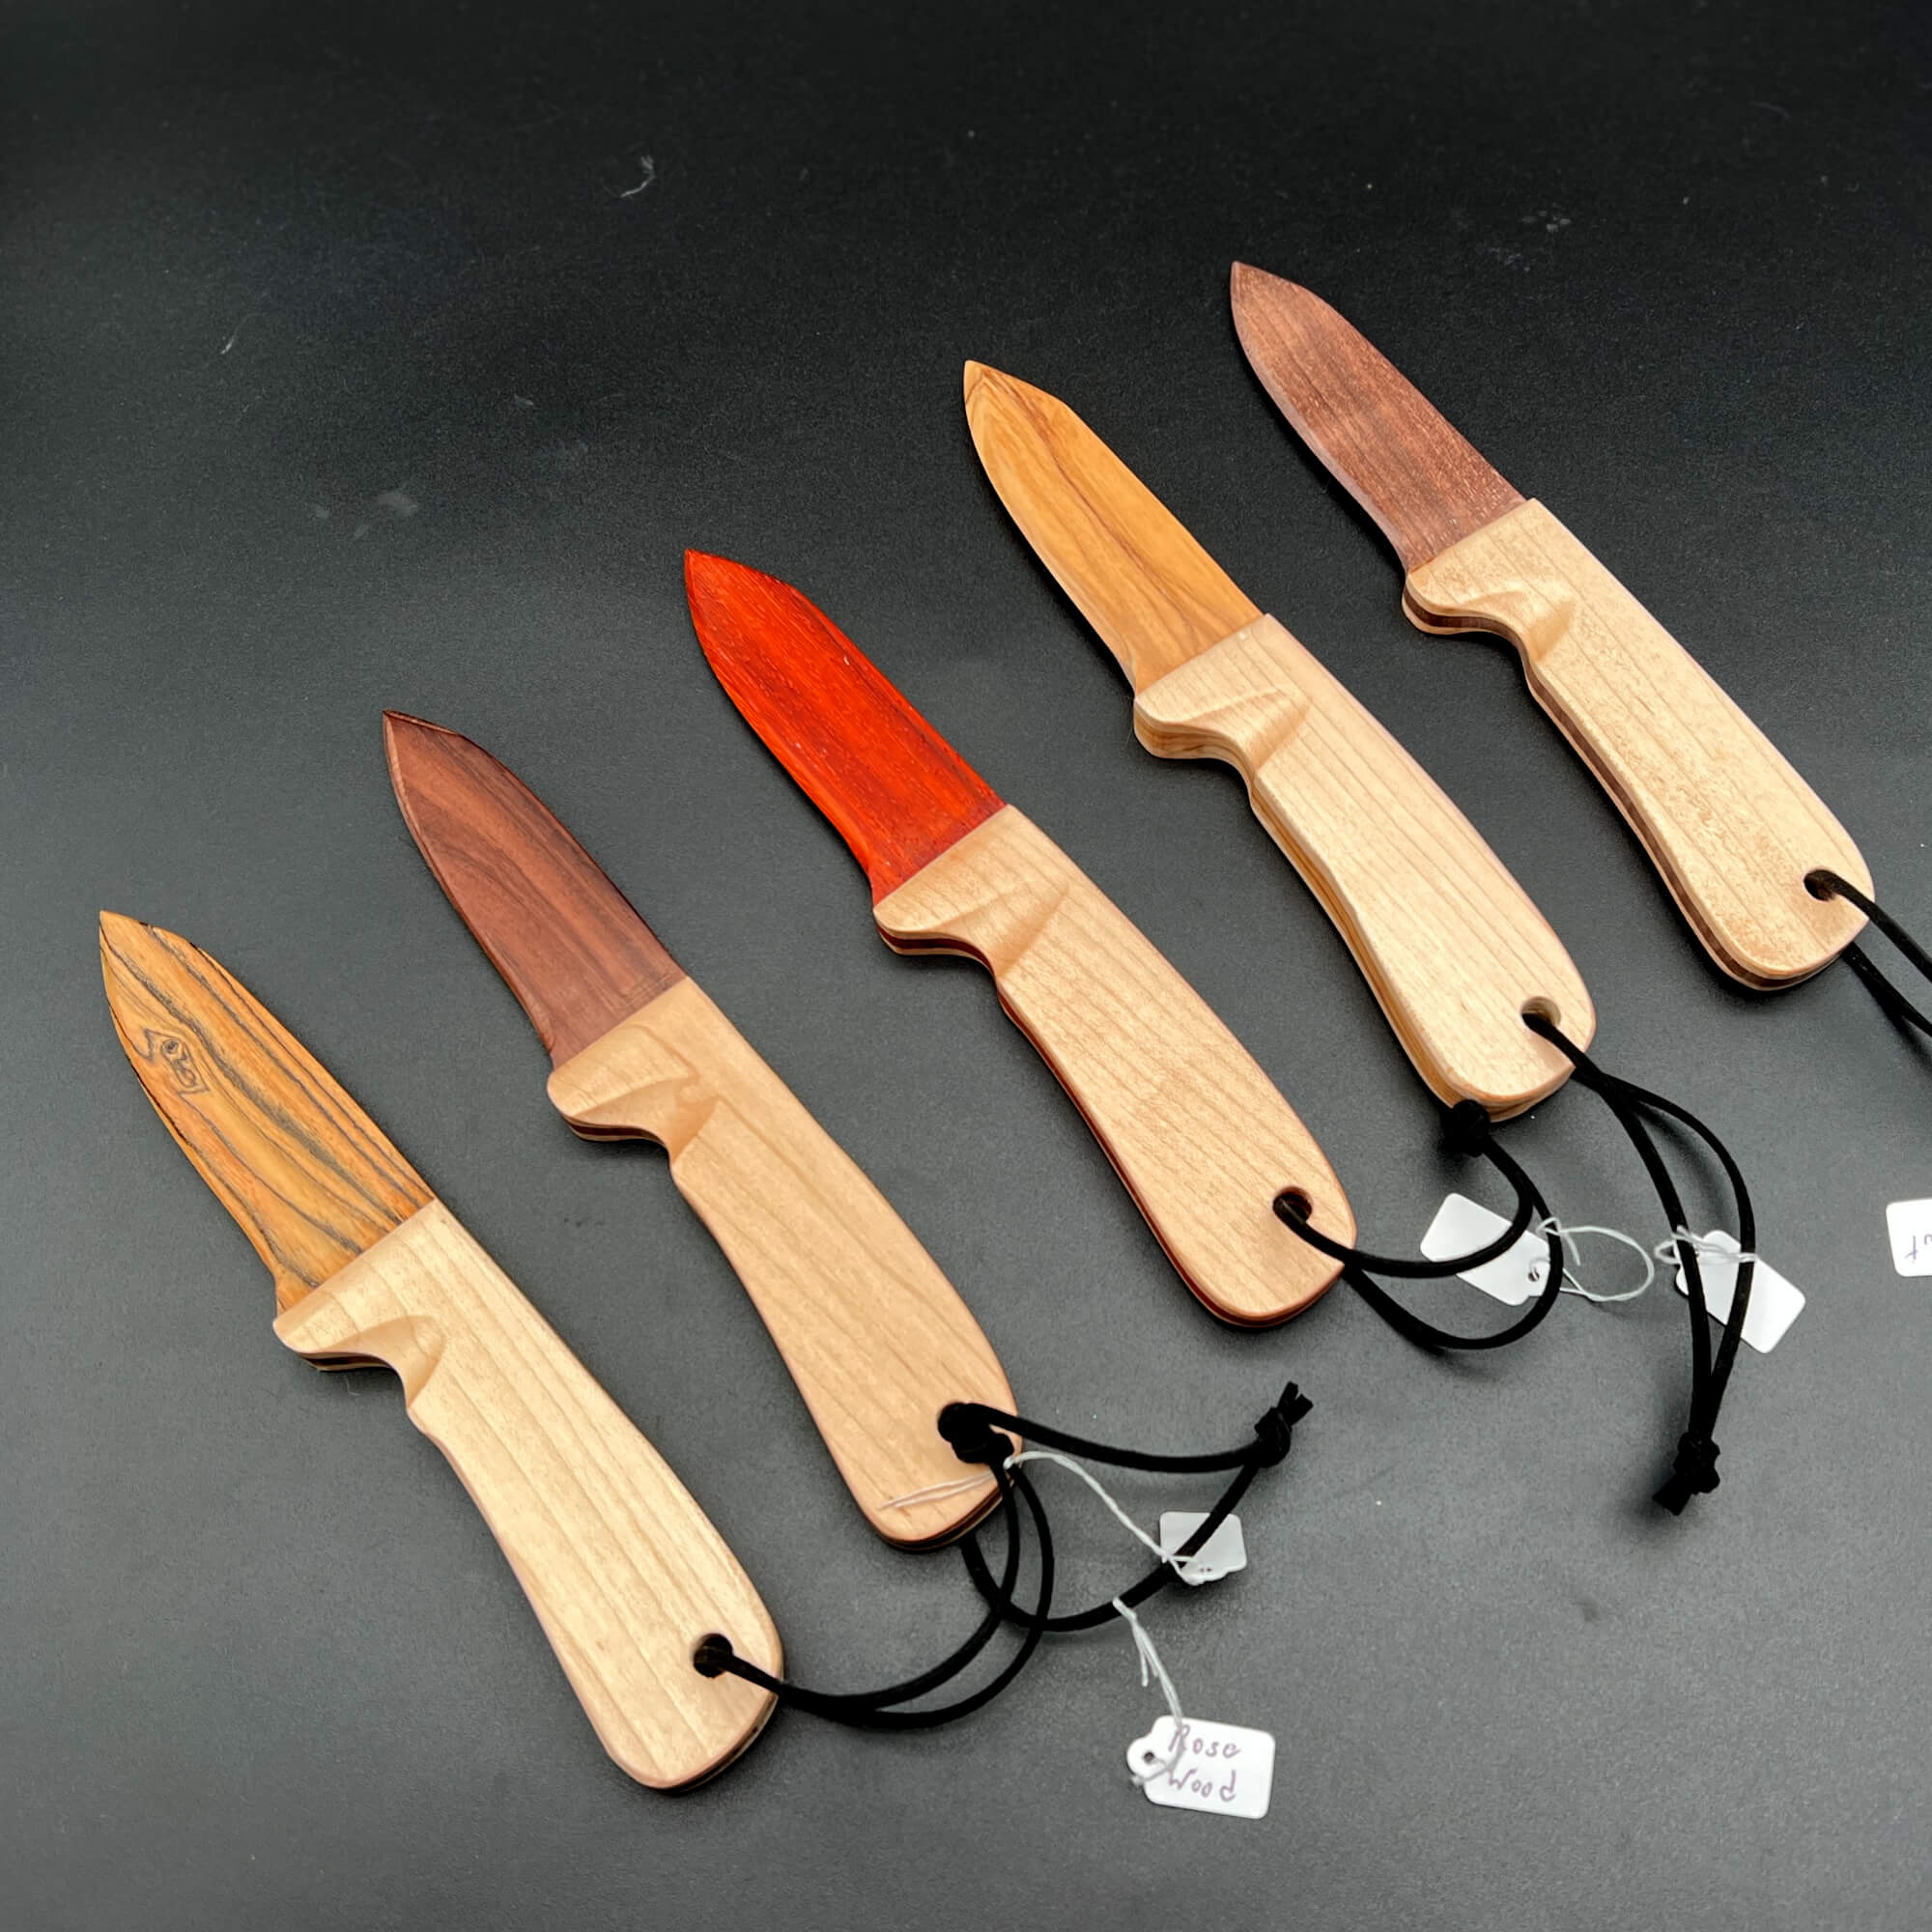 https://thekinkery.com/wp-content/uploads/2022/09/Wooden-knives.jpg